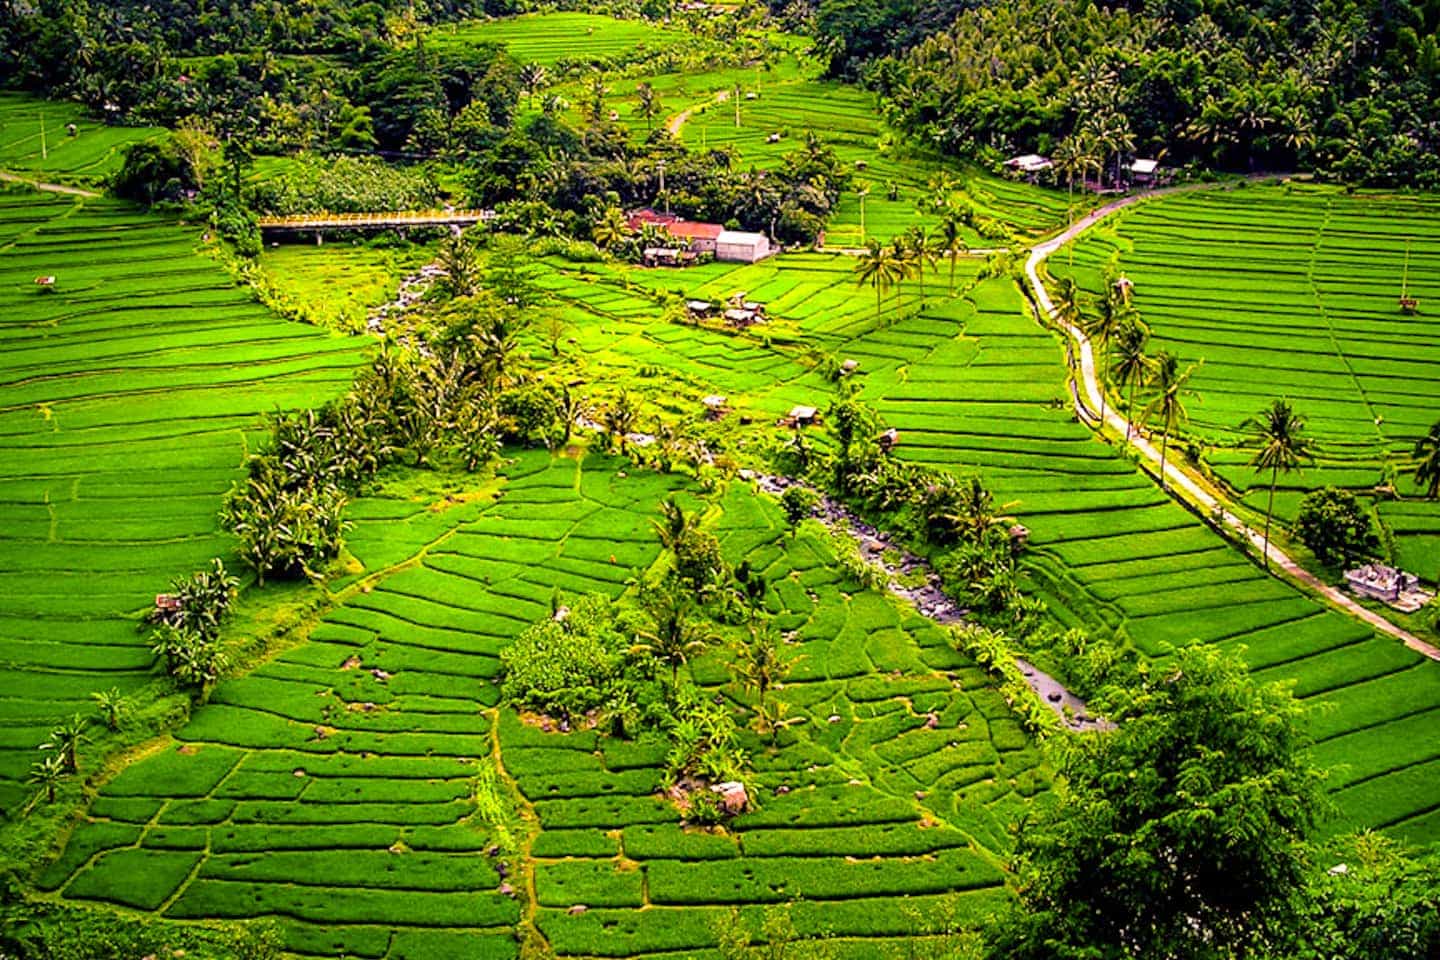 Location photos of beautiful Lombok Indonesia